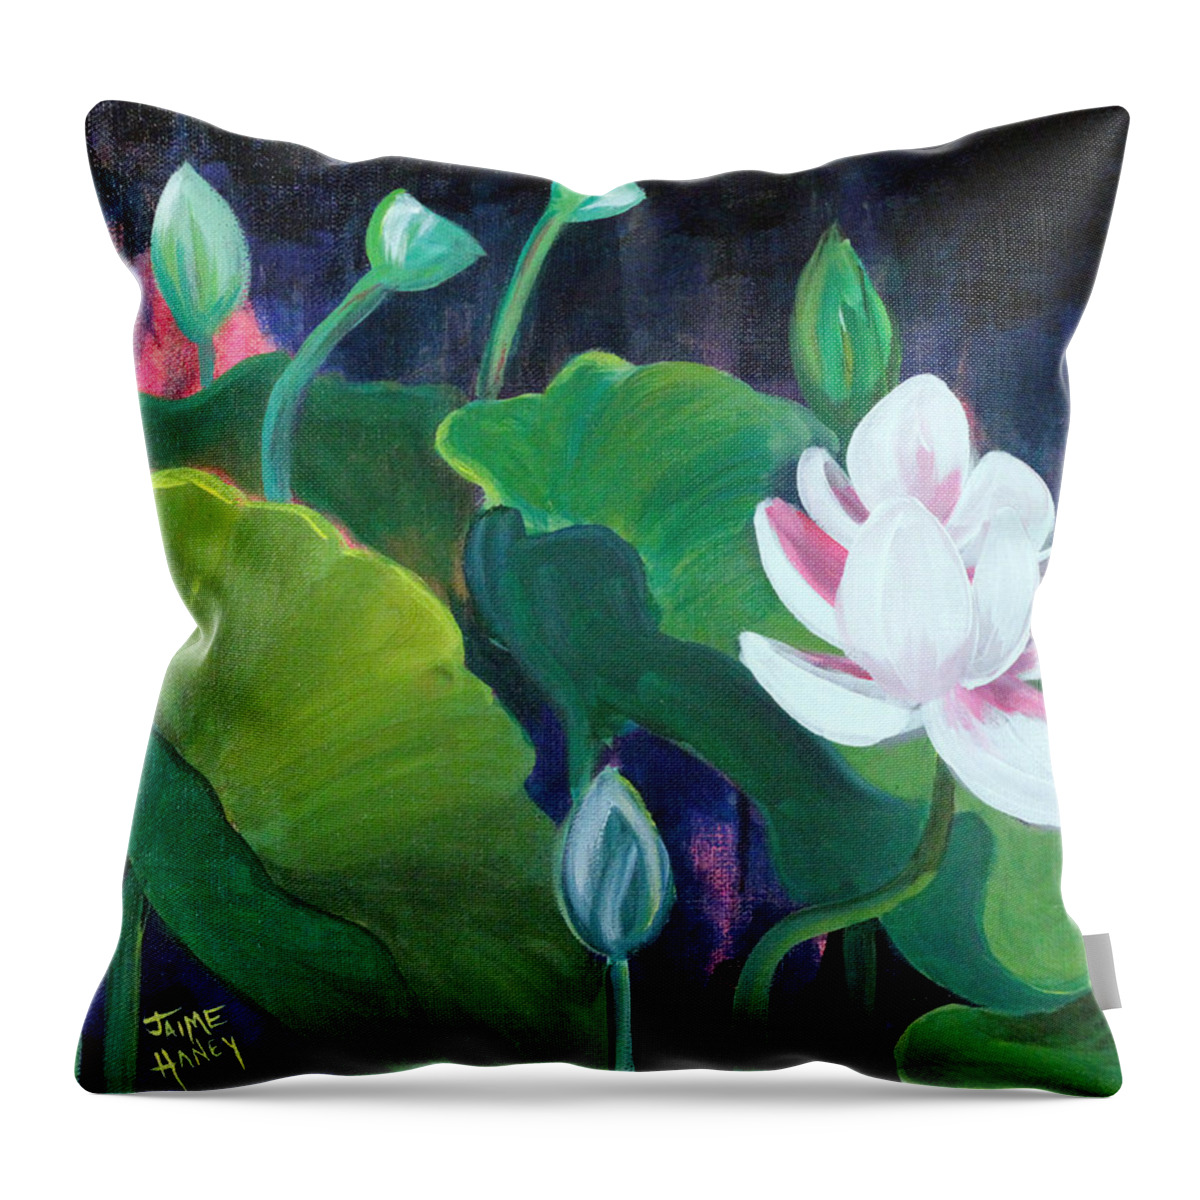 Lotus Garden Throw Pillow featuring the painting Lotus Garden 1 by Jaime Haney